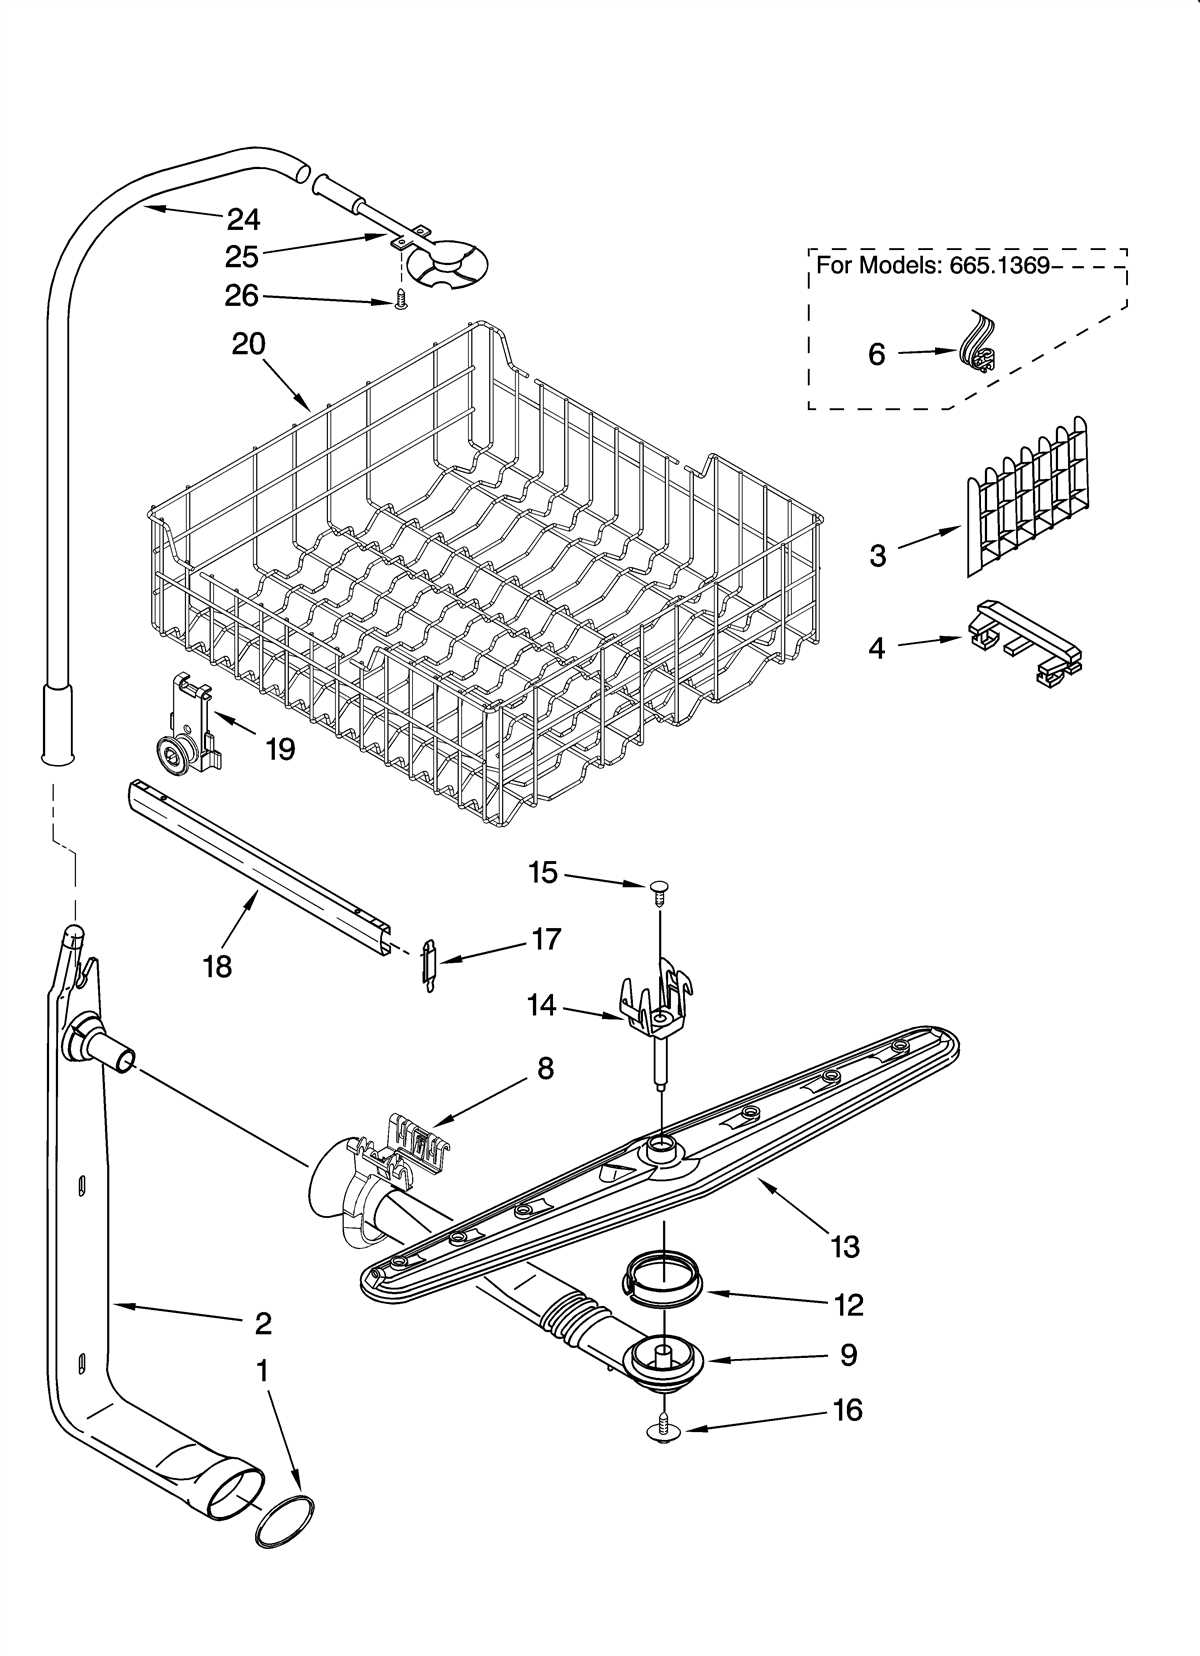 Kenmore dishwasher model 665 schematic